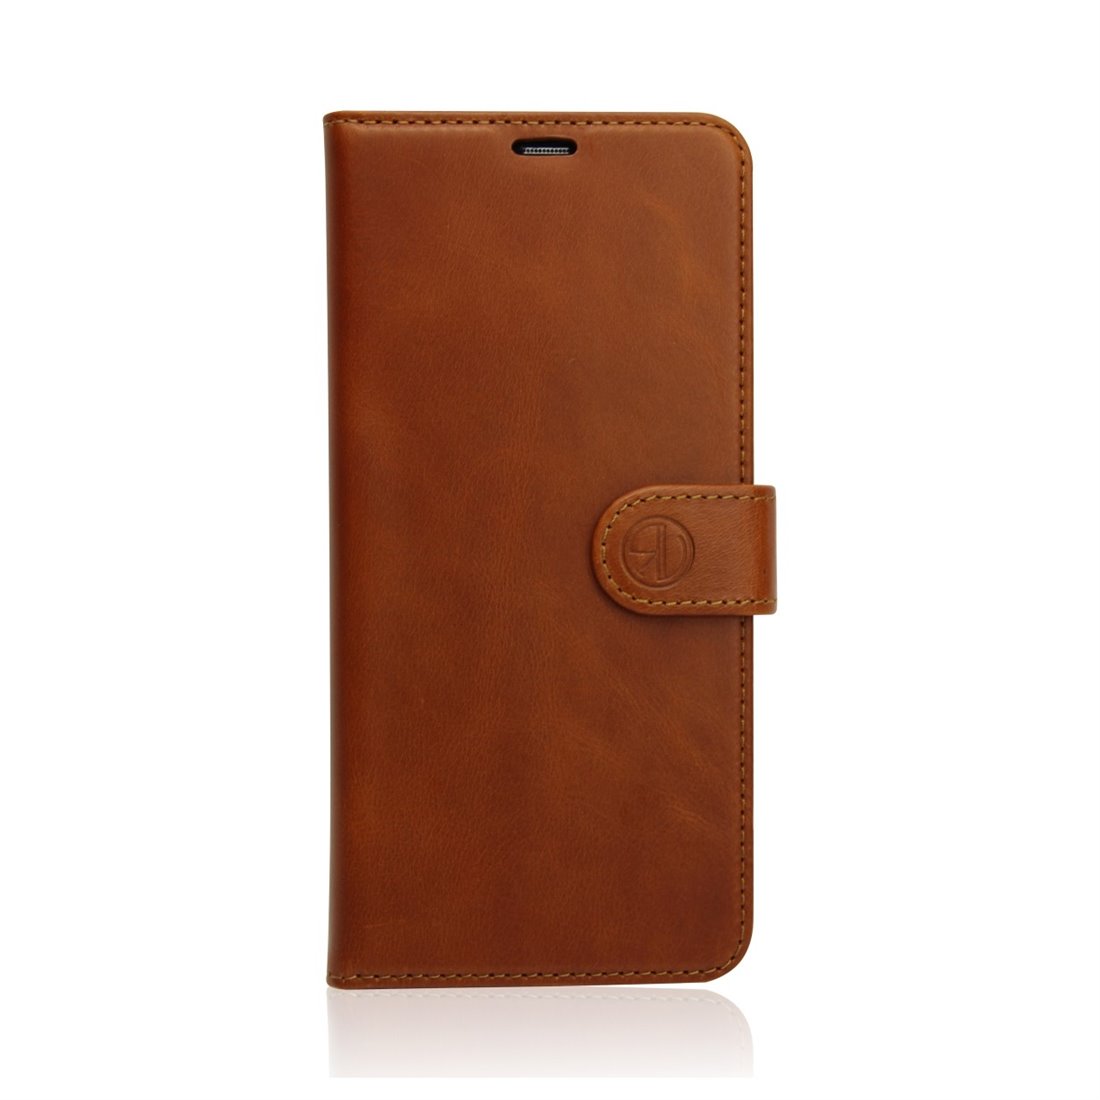 Genuine Leather Book Case for Samsun Galaxy S20 plus light brown